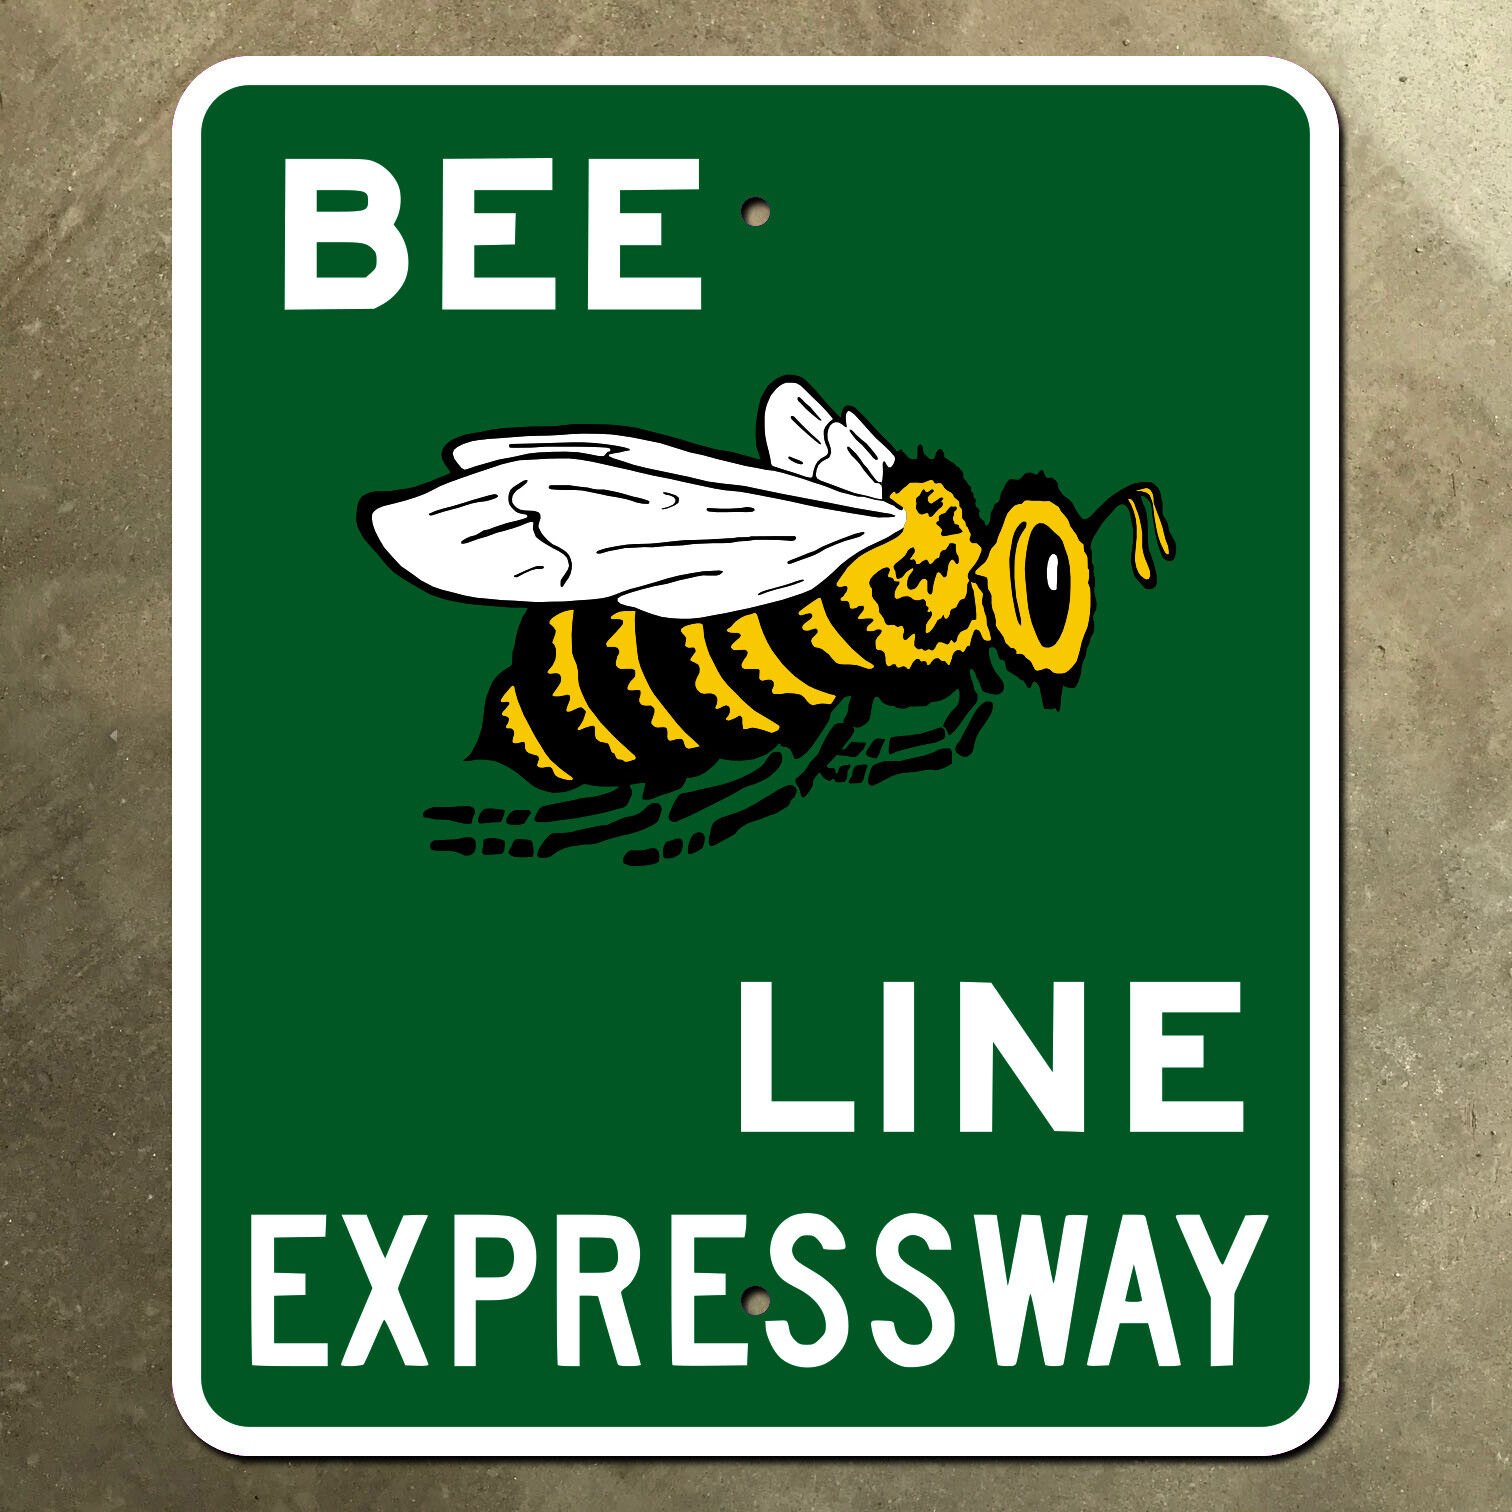 Florida Bee Line Expressway Beachline Orlando highway marker road sign 10x12